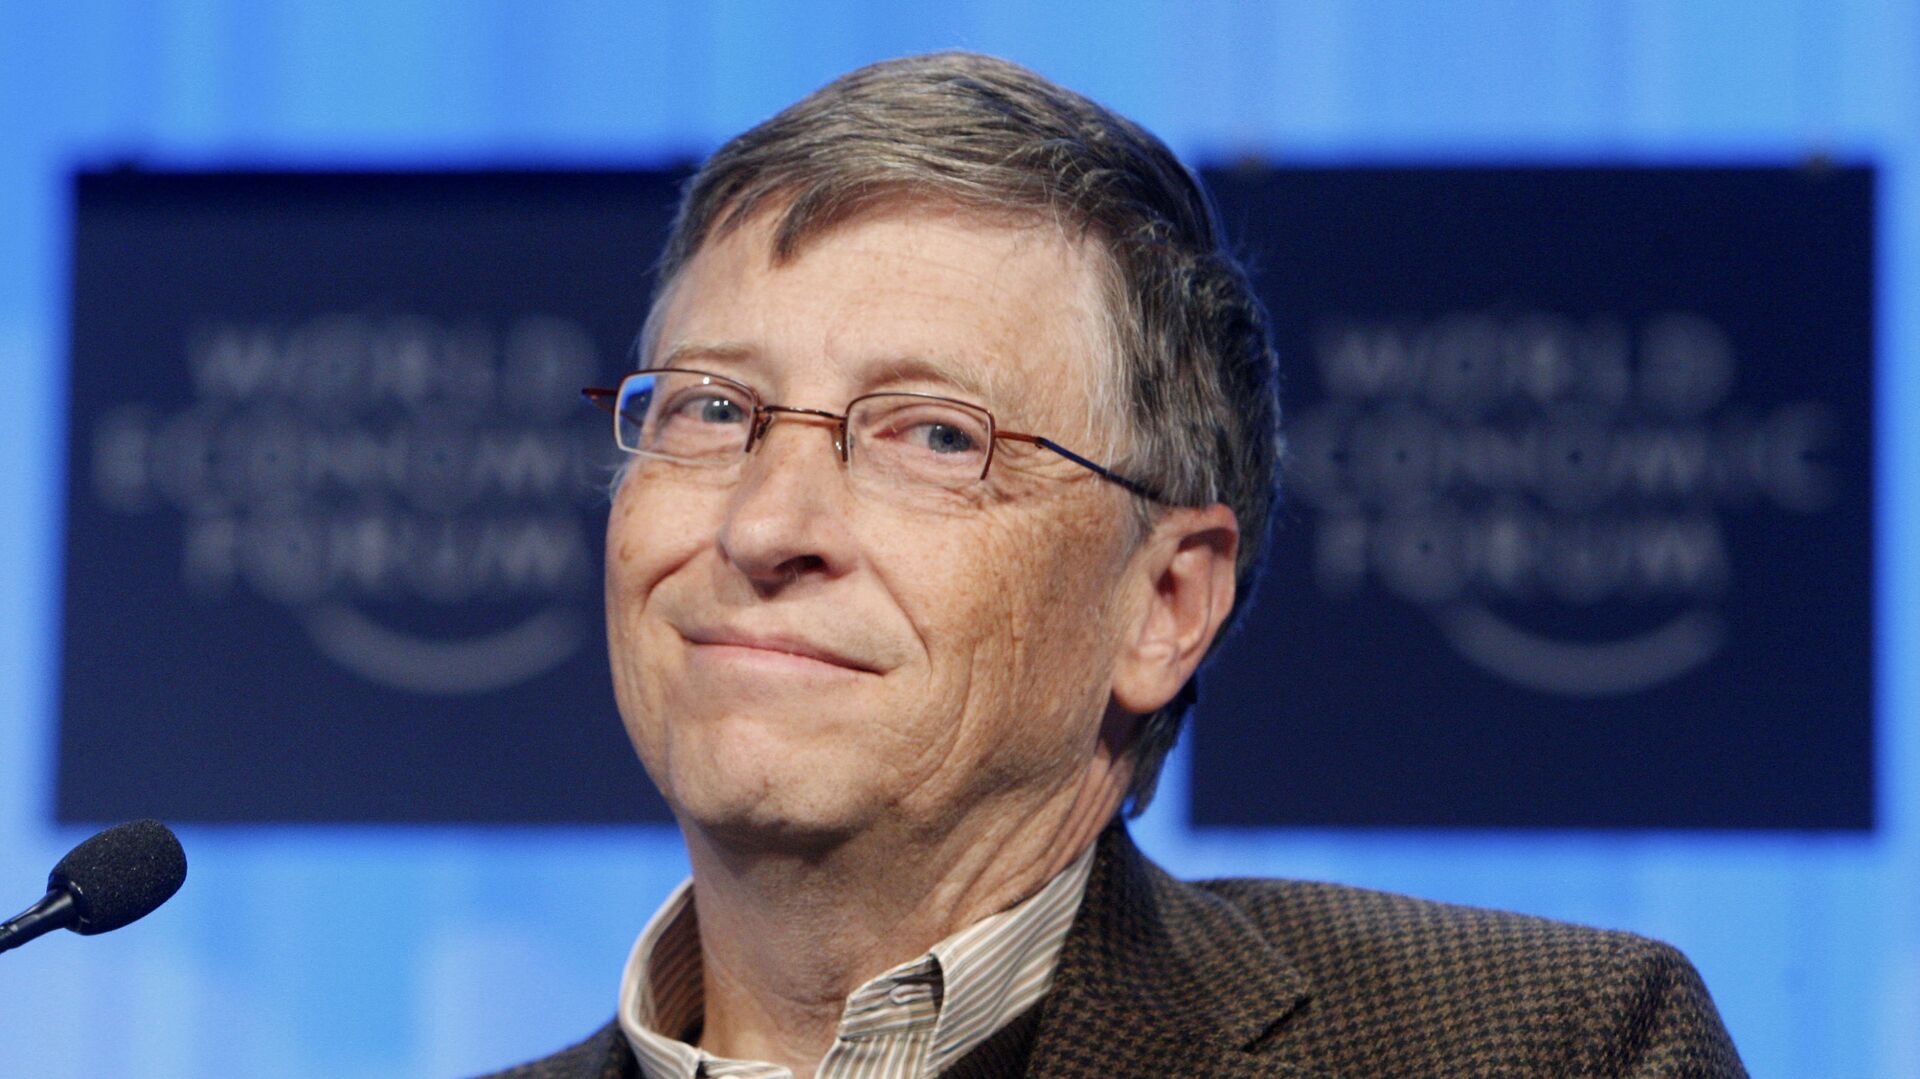 Microsoft founder Bill Gates looks on during a panel discussion on Meeting the Millennium Development Goals, at the World Economic Forum in Davos, Switzerland, Friday, Jan. 29, 2010 - Sputnik International, 1920, 28.08.2021